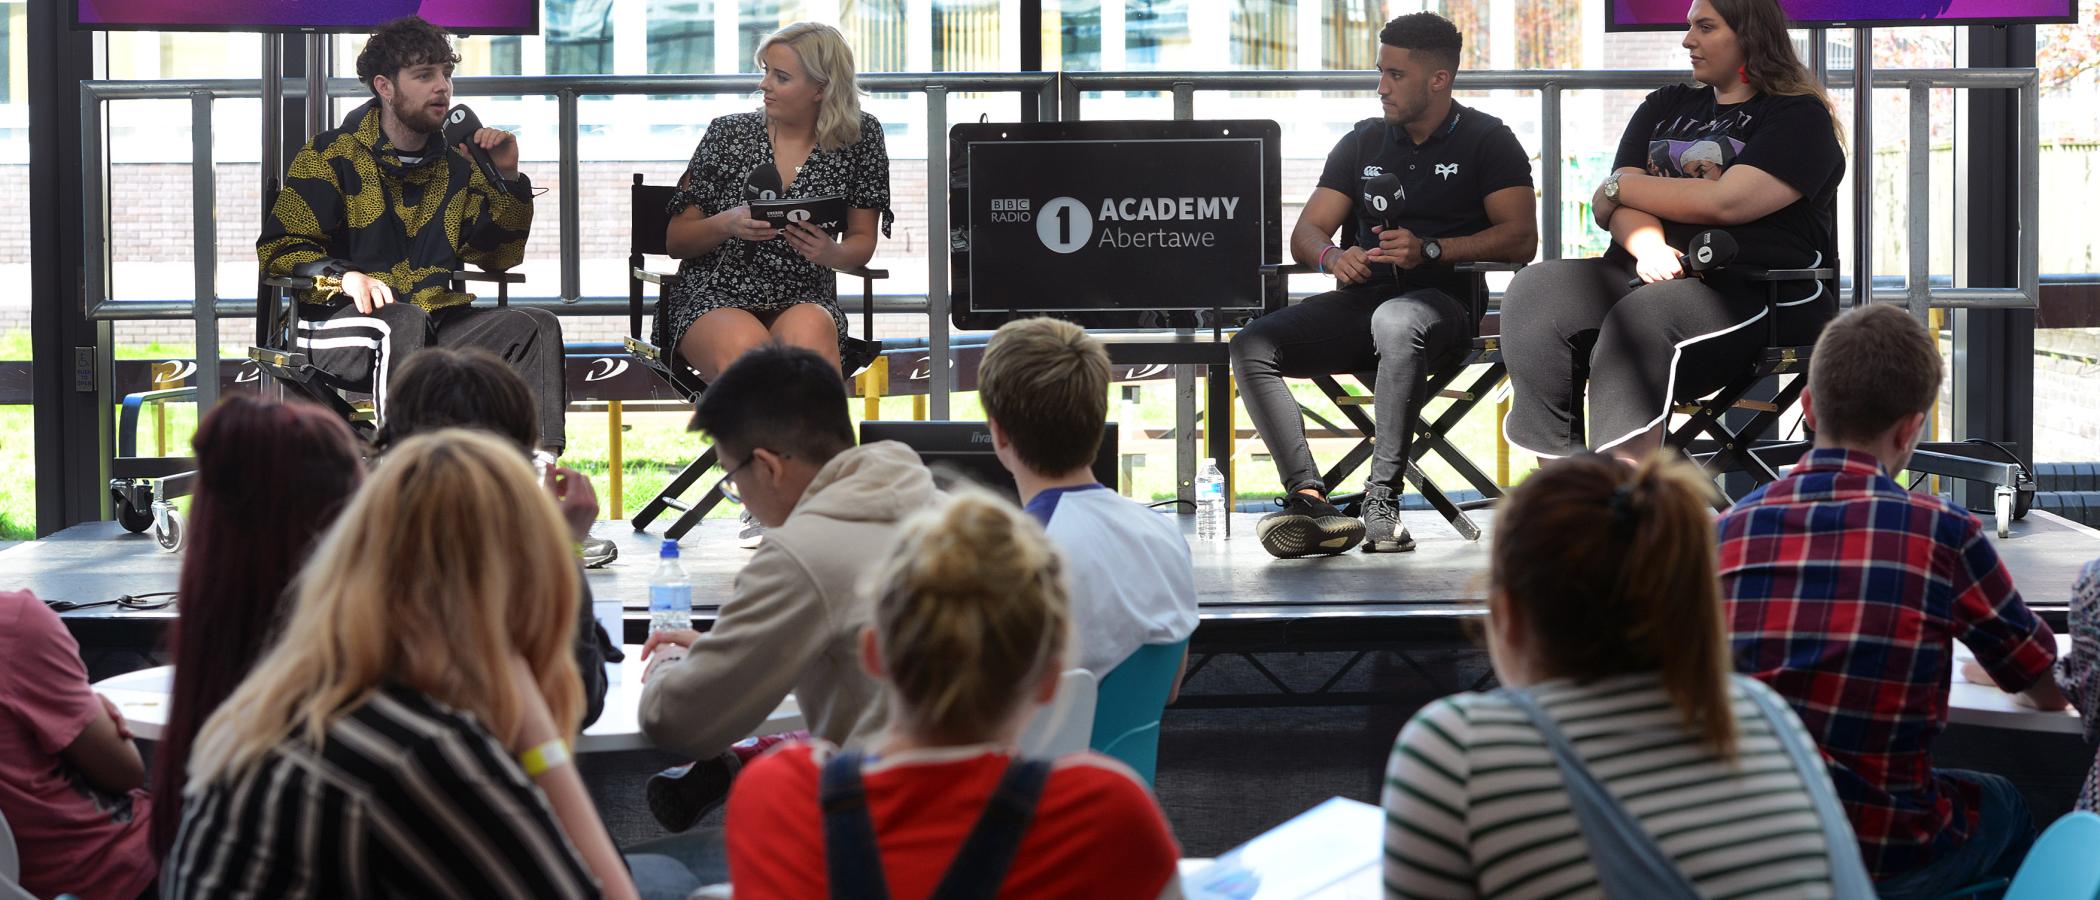 College hosts events linked to BBC Radio 1 Academy